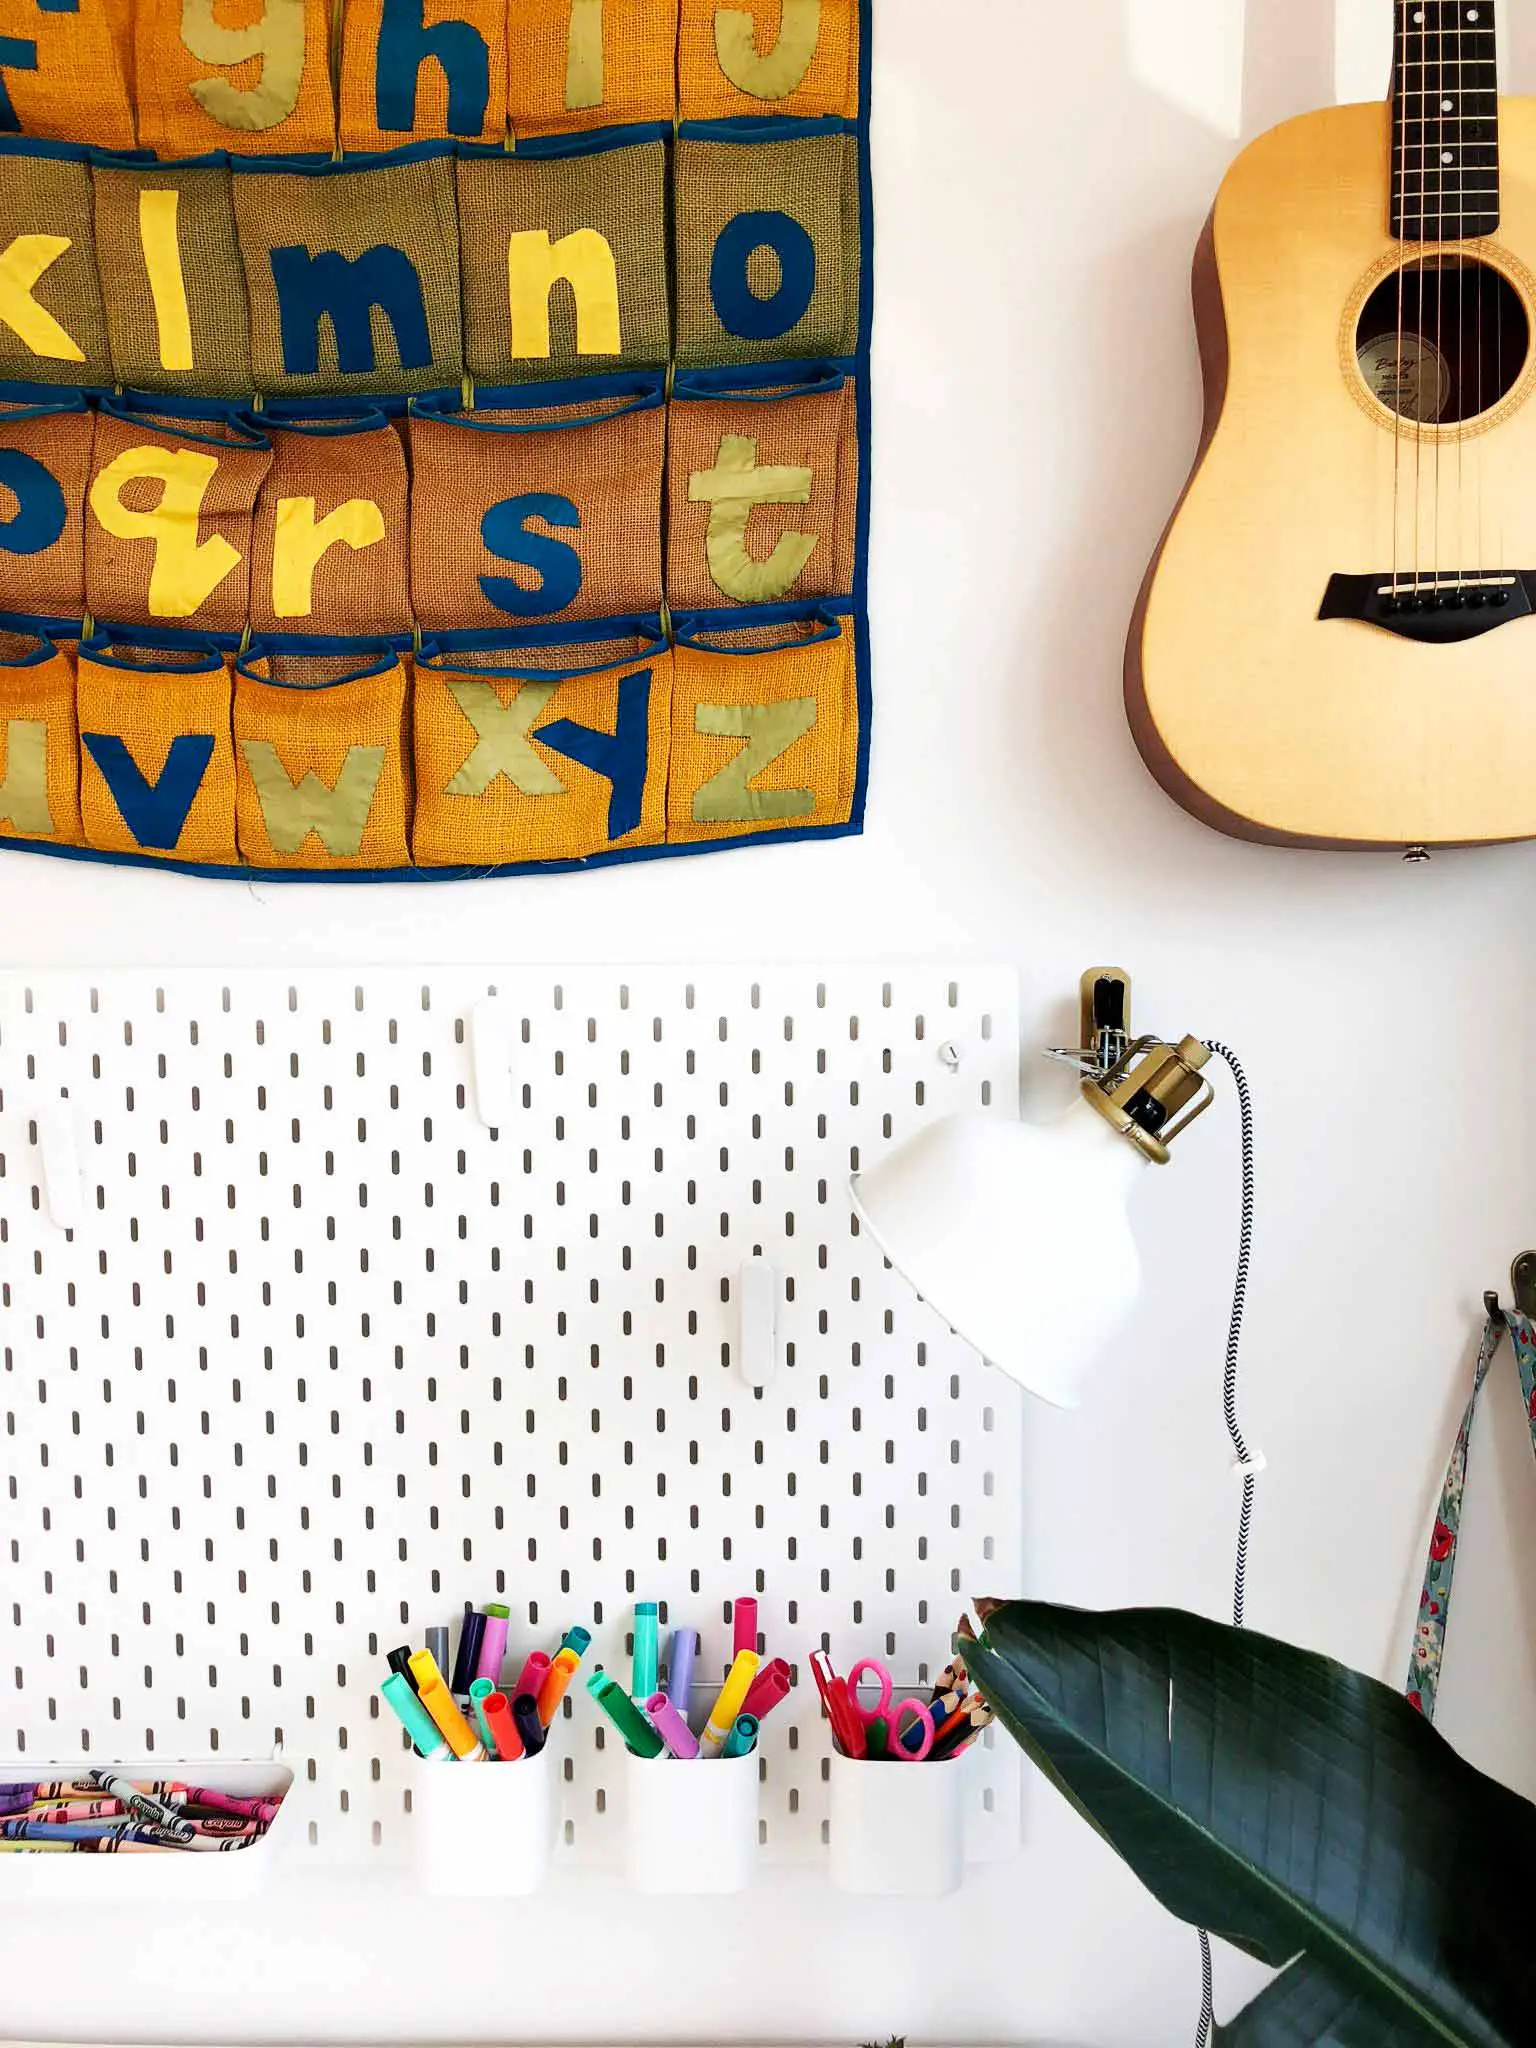 Kids craft area in the playroom using IKEA SKÅDIS pegboard series